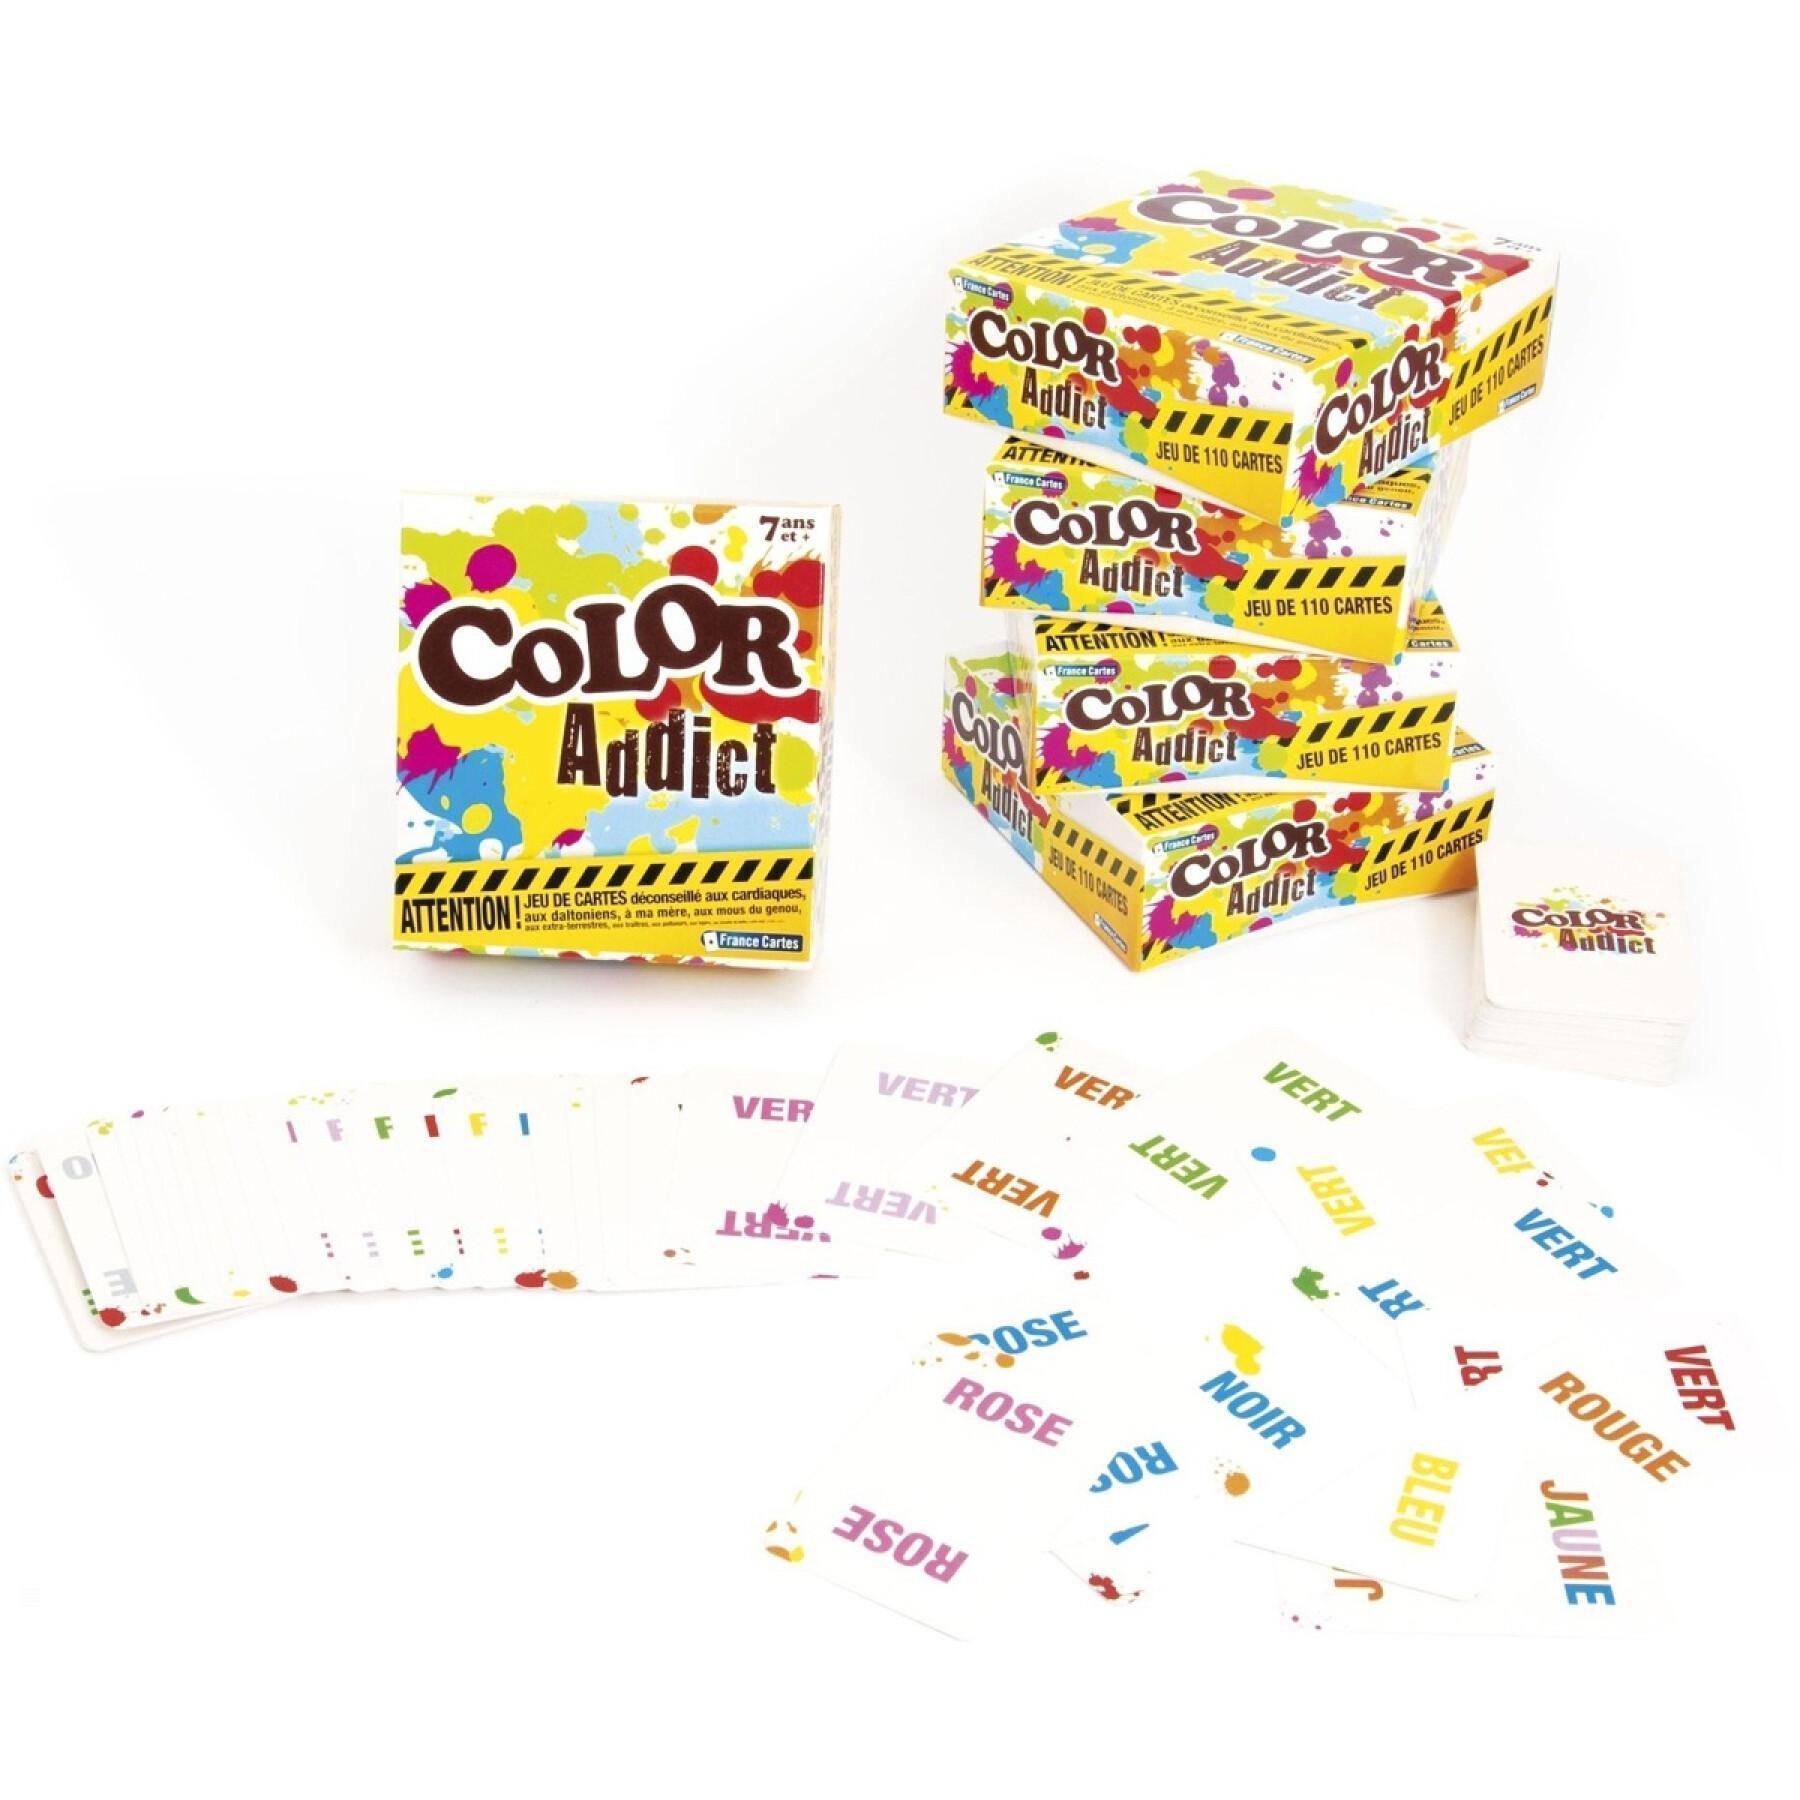 Color addict board games France Cartes